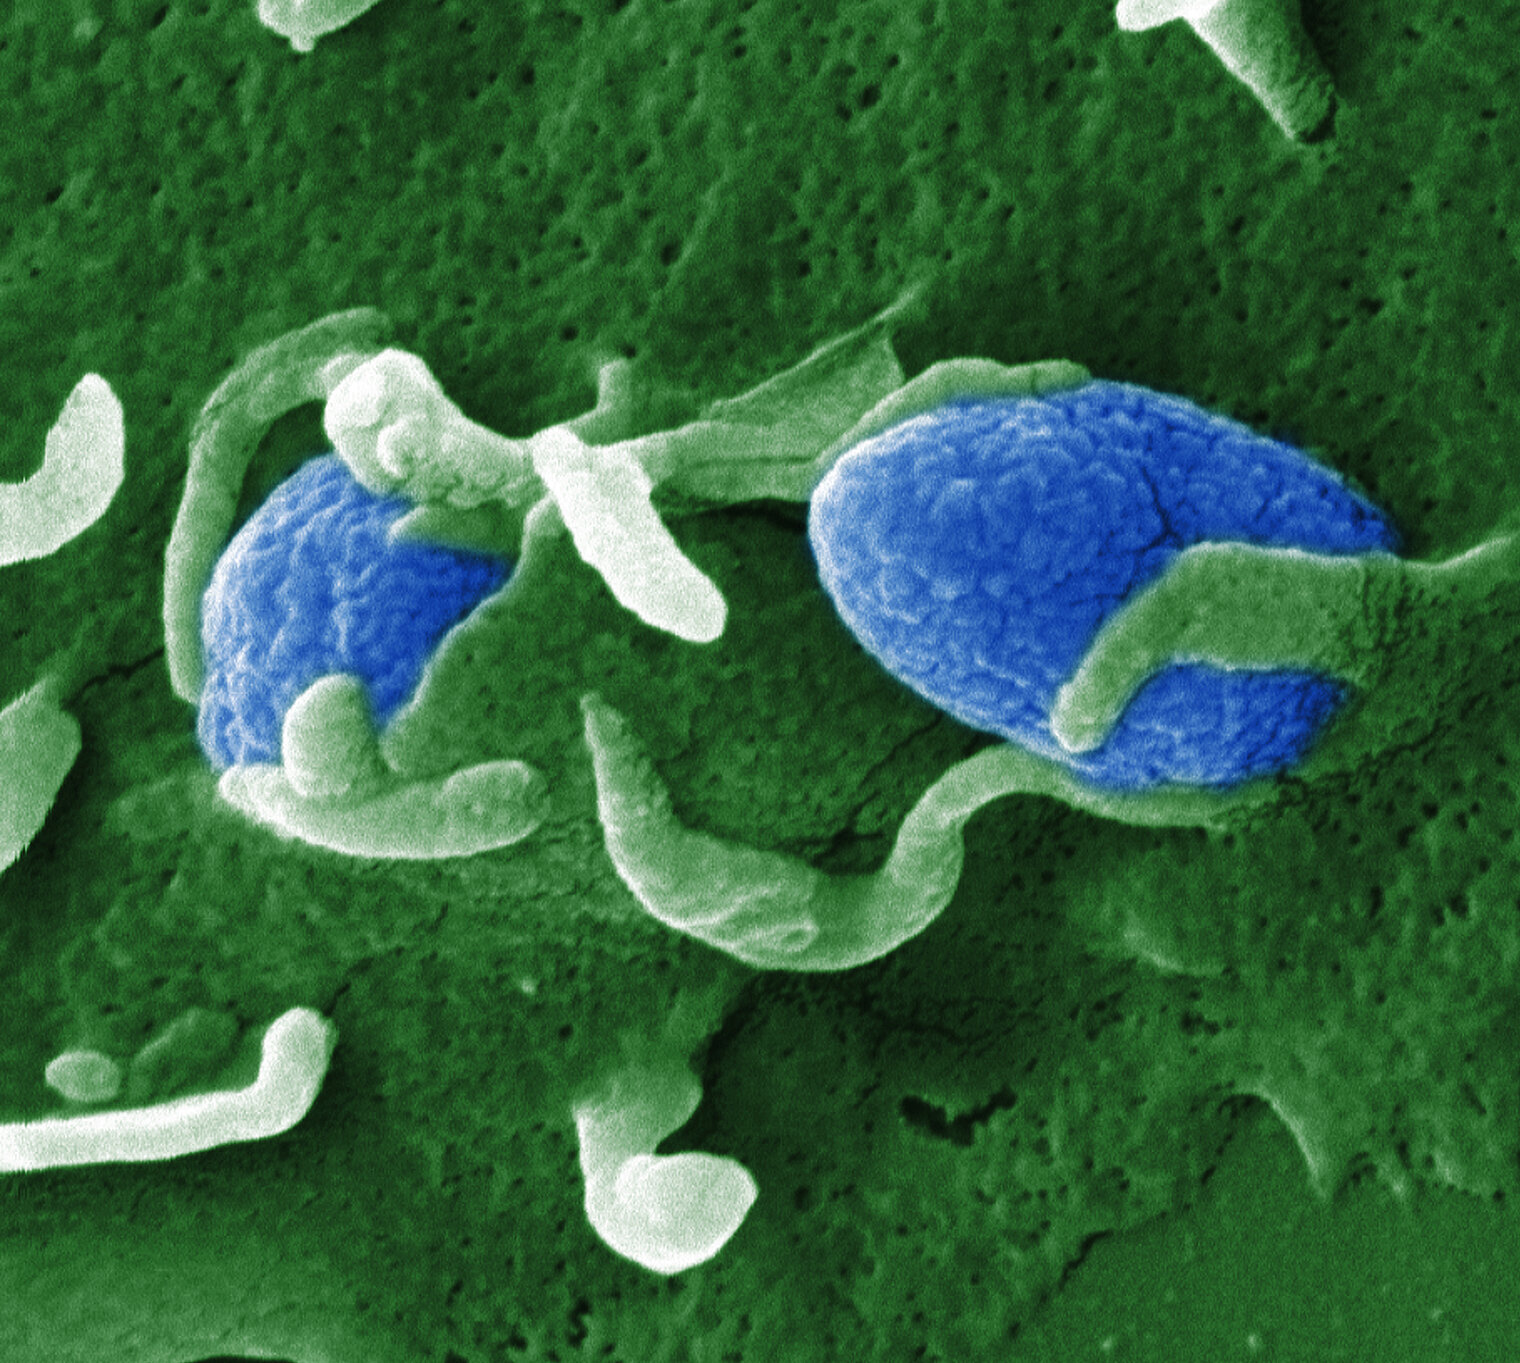 Invasion of Yersinia enterocolytica in cells